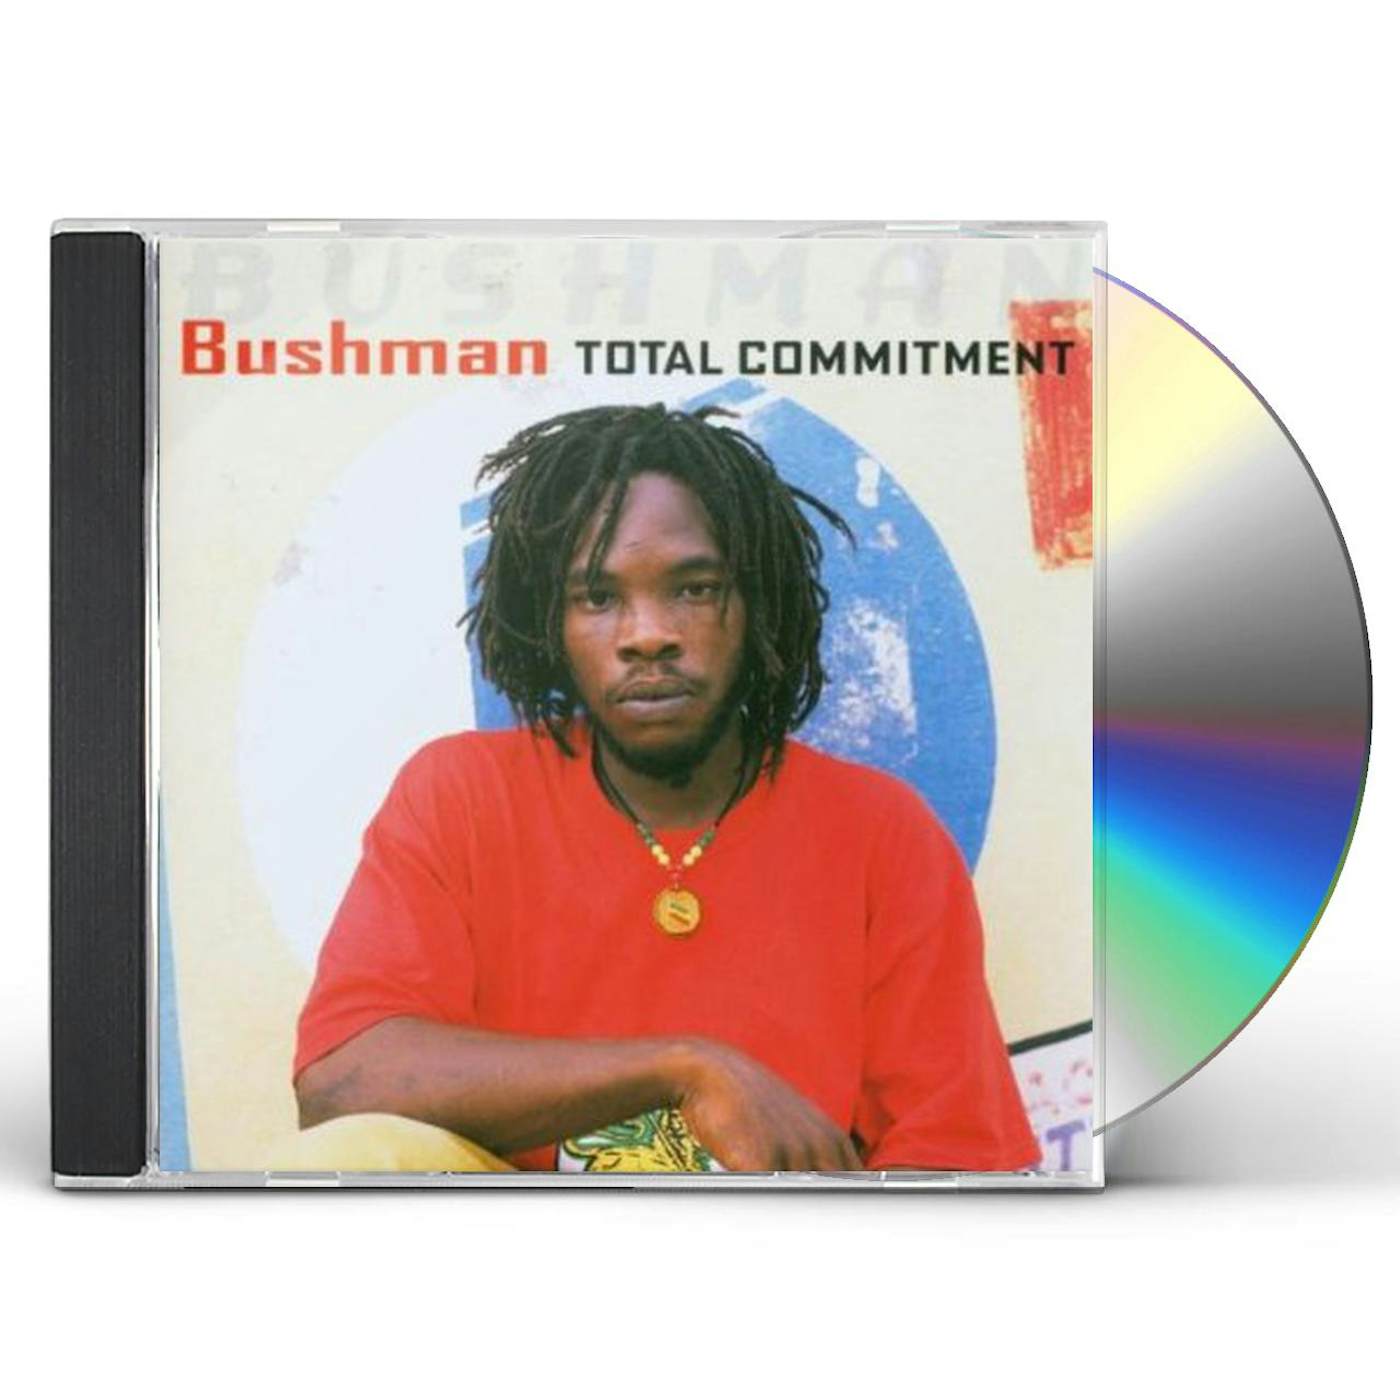 Bushman TOTAL COMMITMENT CD